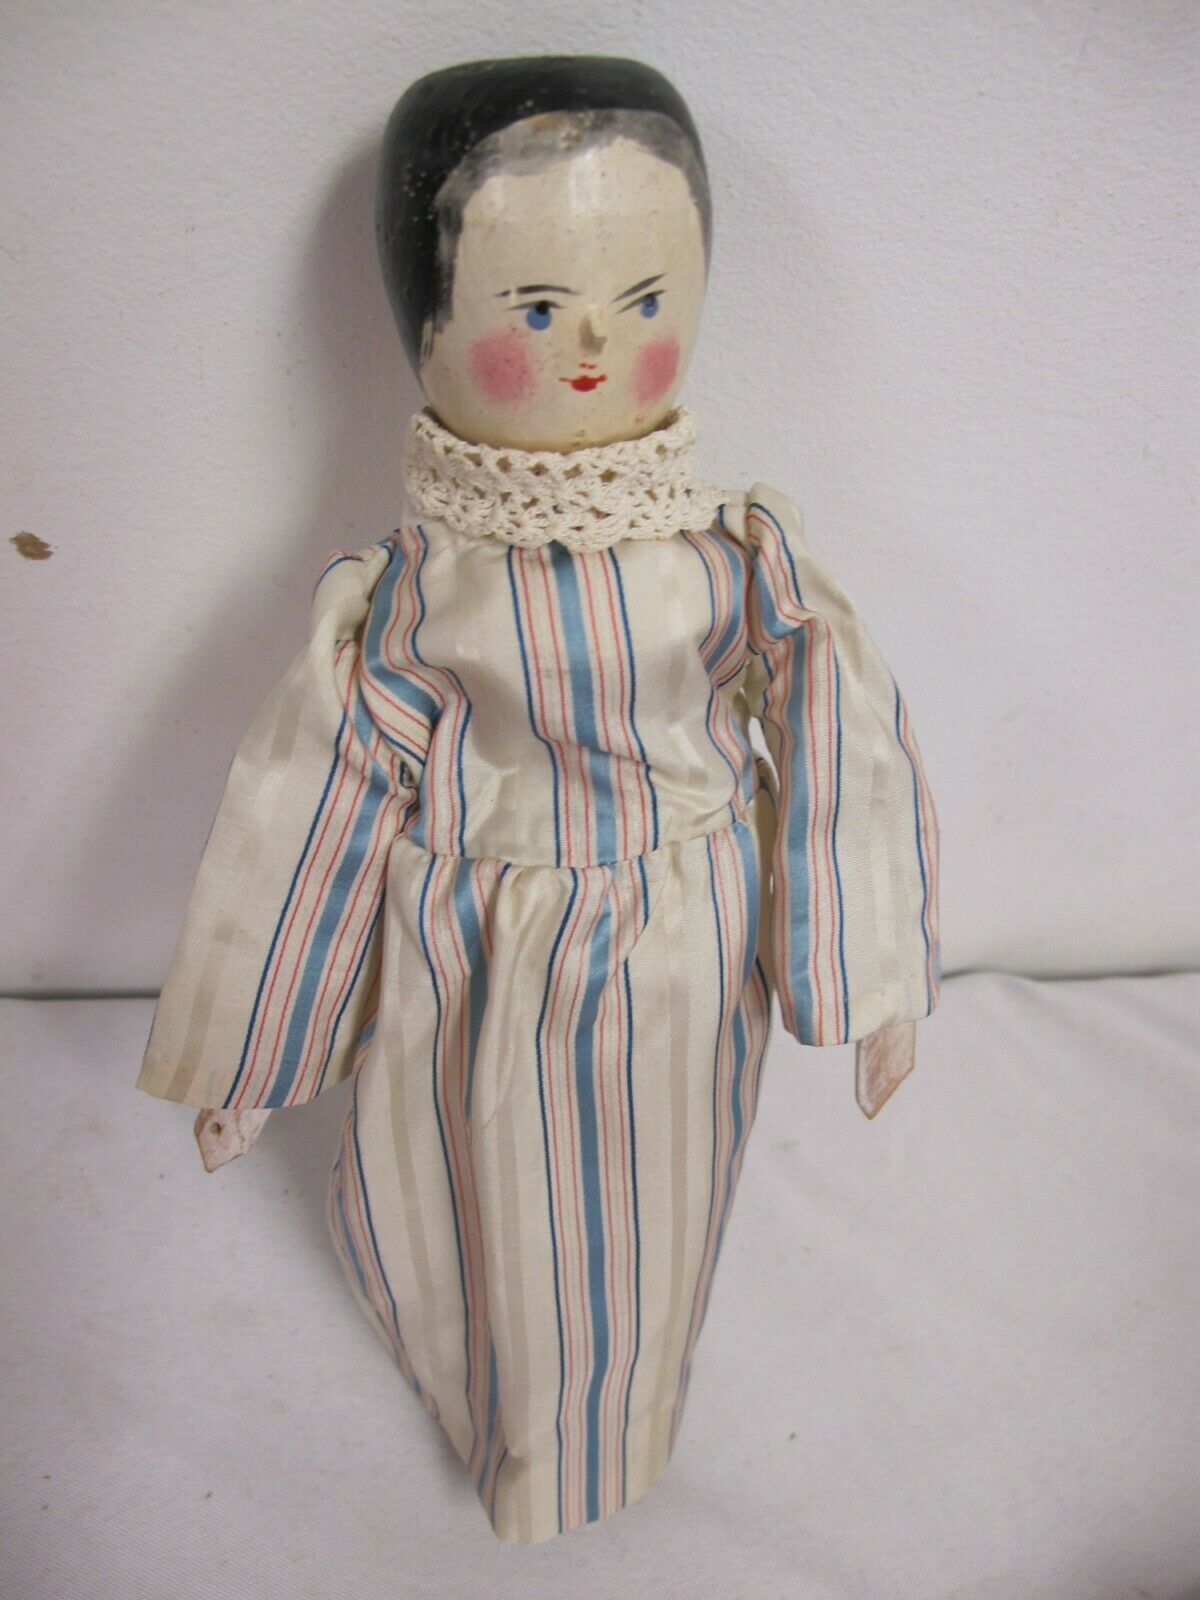 Vintage Antique Wooden Peg Doll 11" With Dress & Under Garments